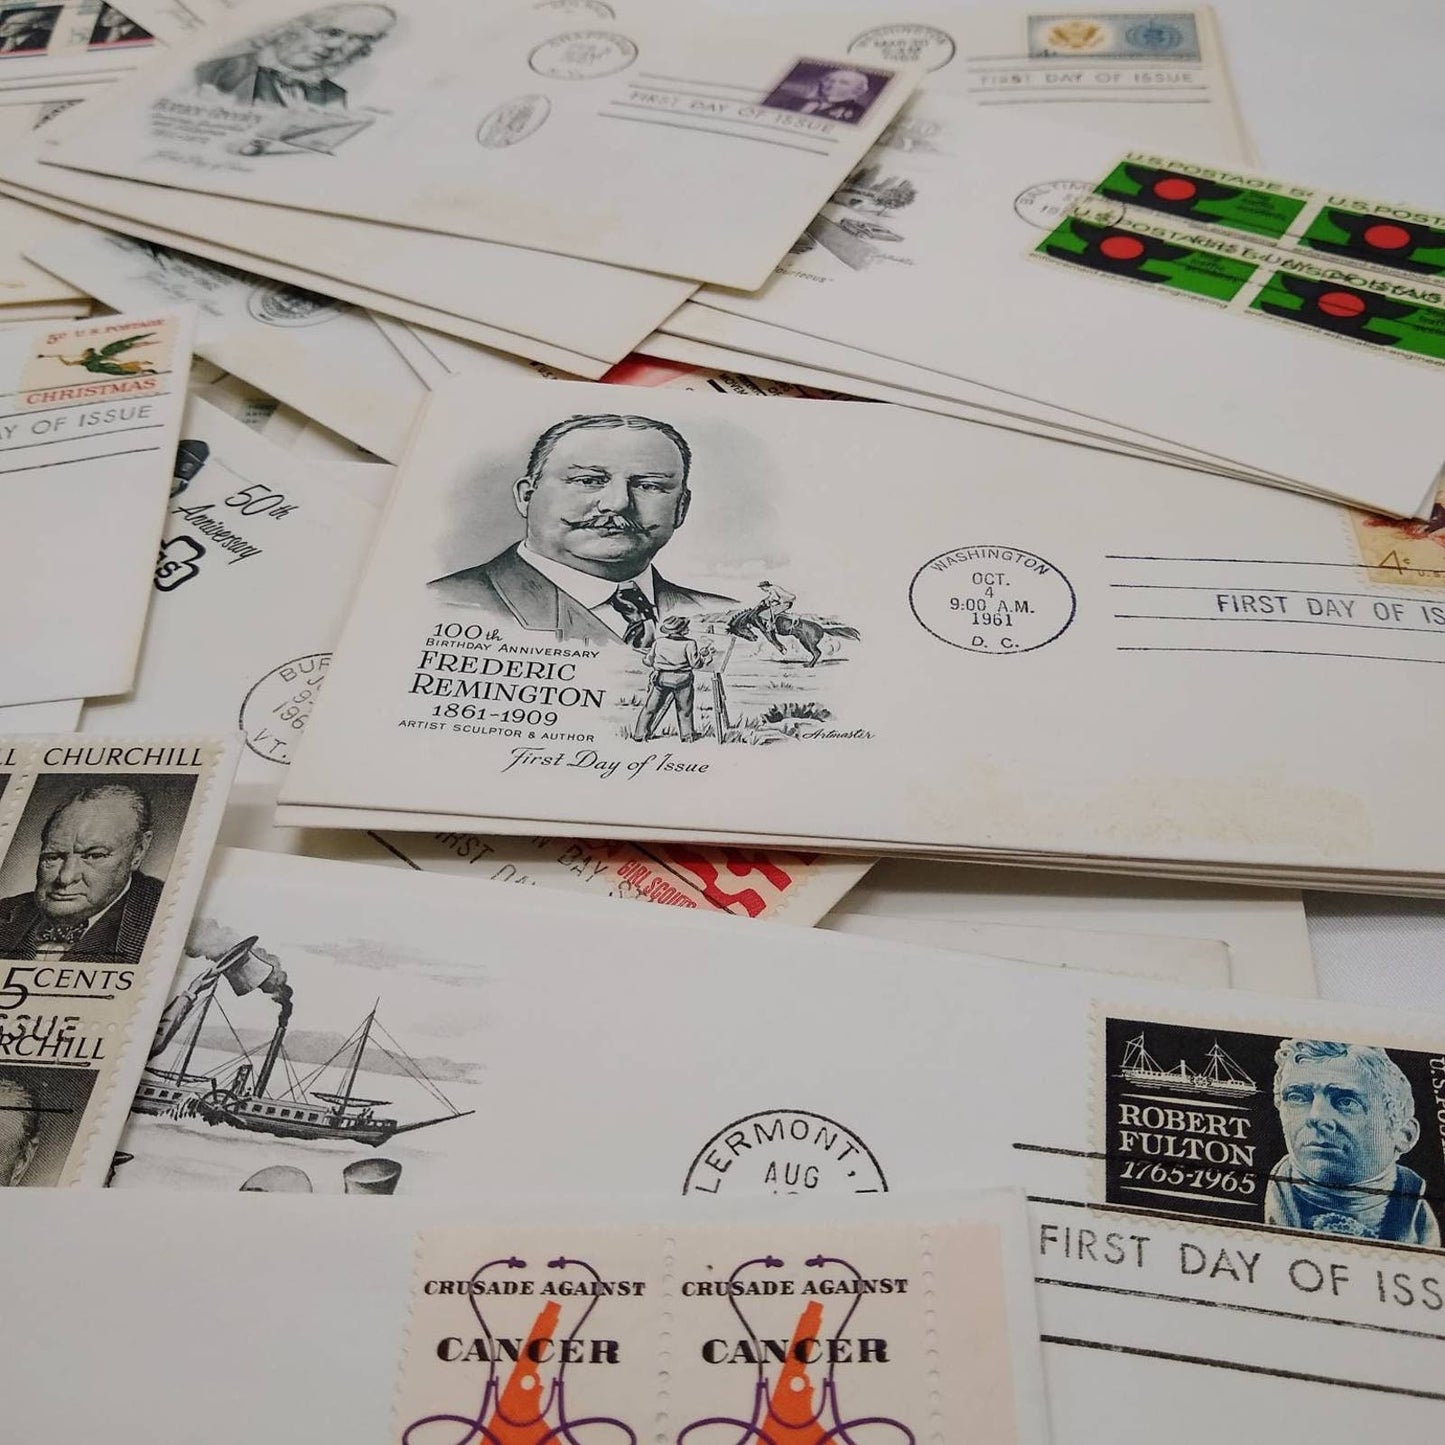 25 First Day of Issue Envelopes, Vintage Envelopes,  1960s Envelopes